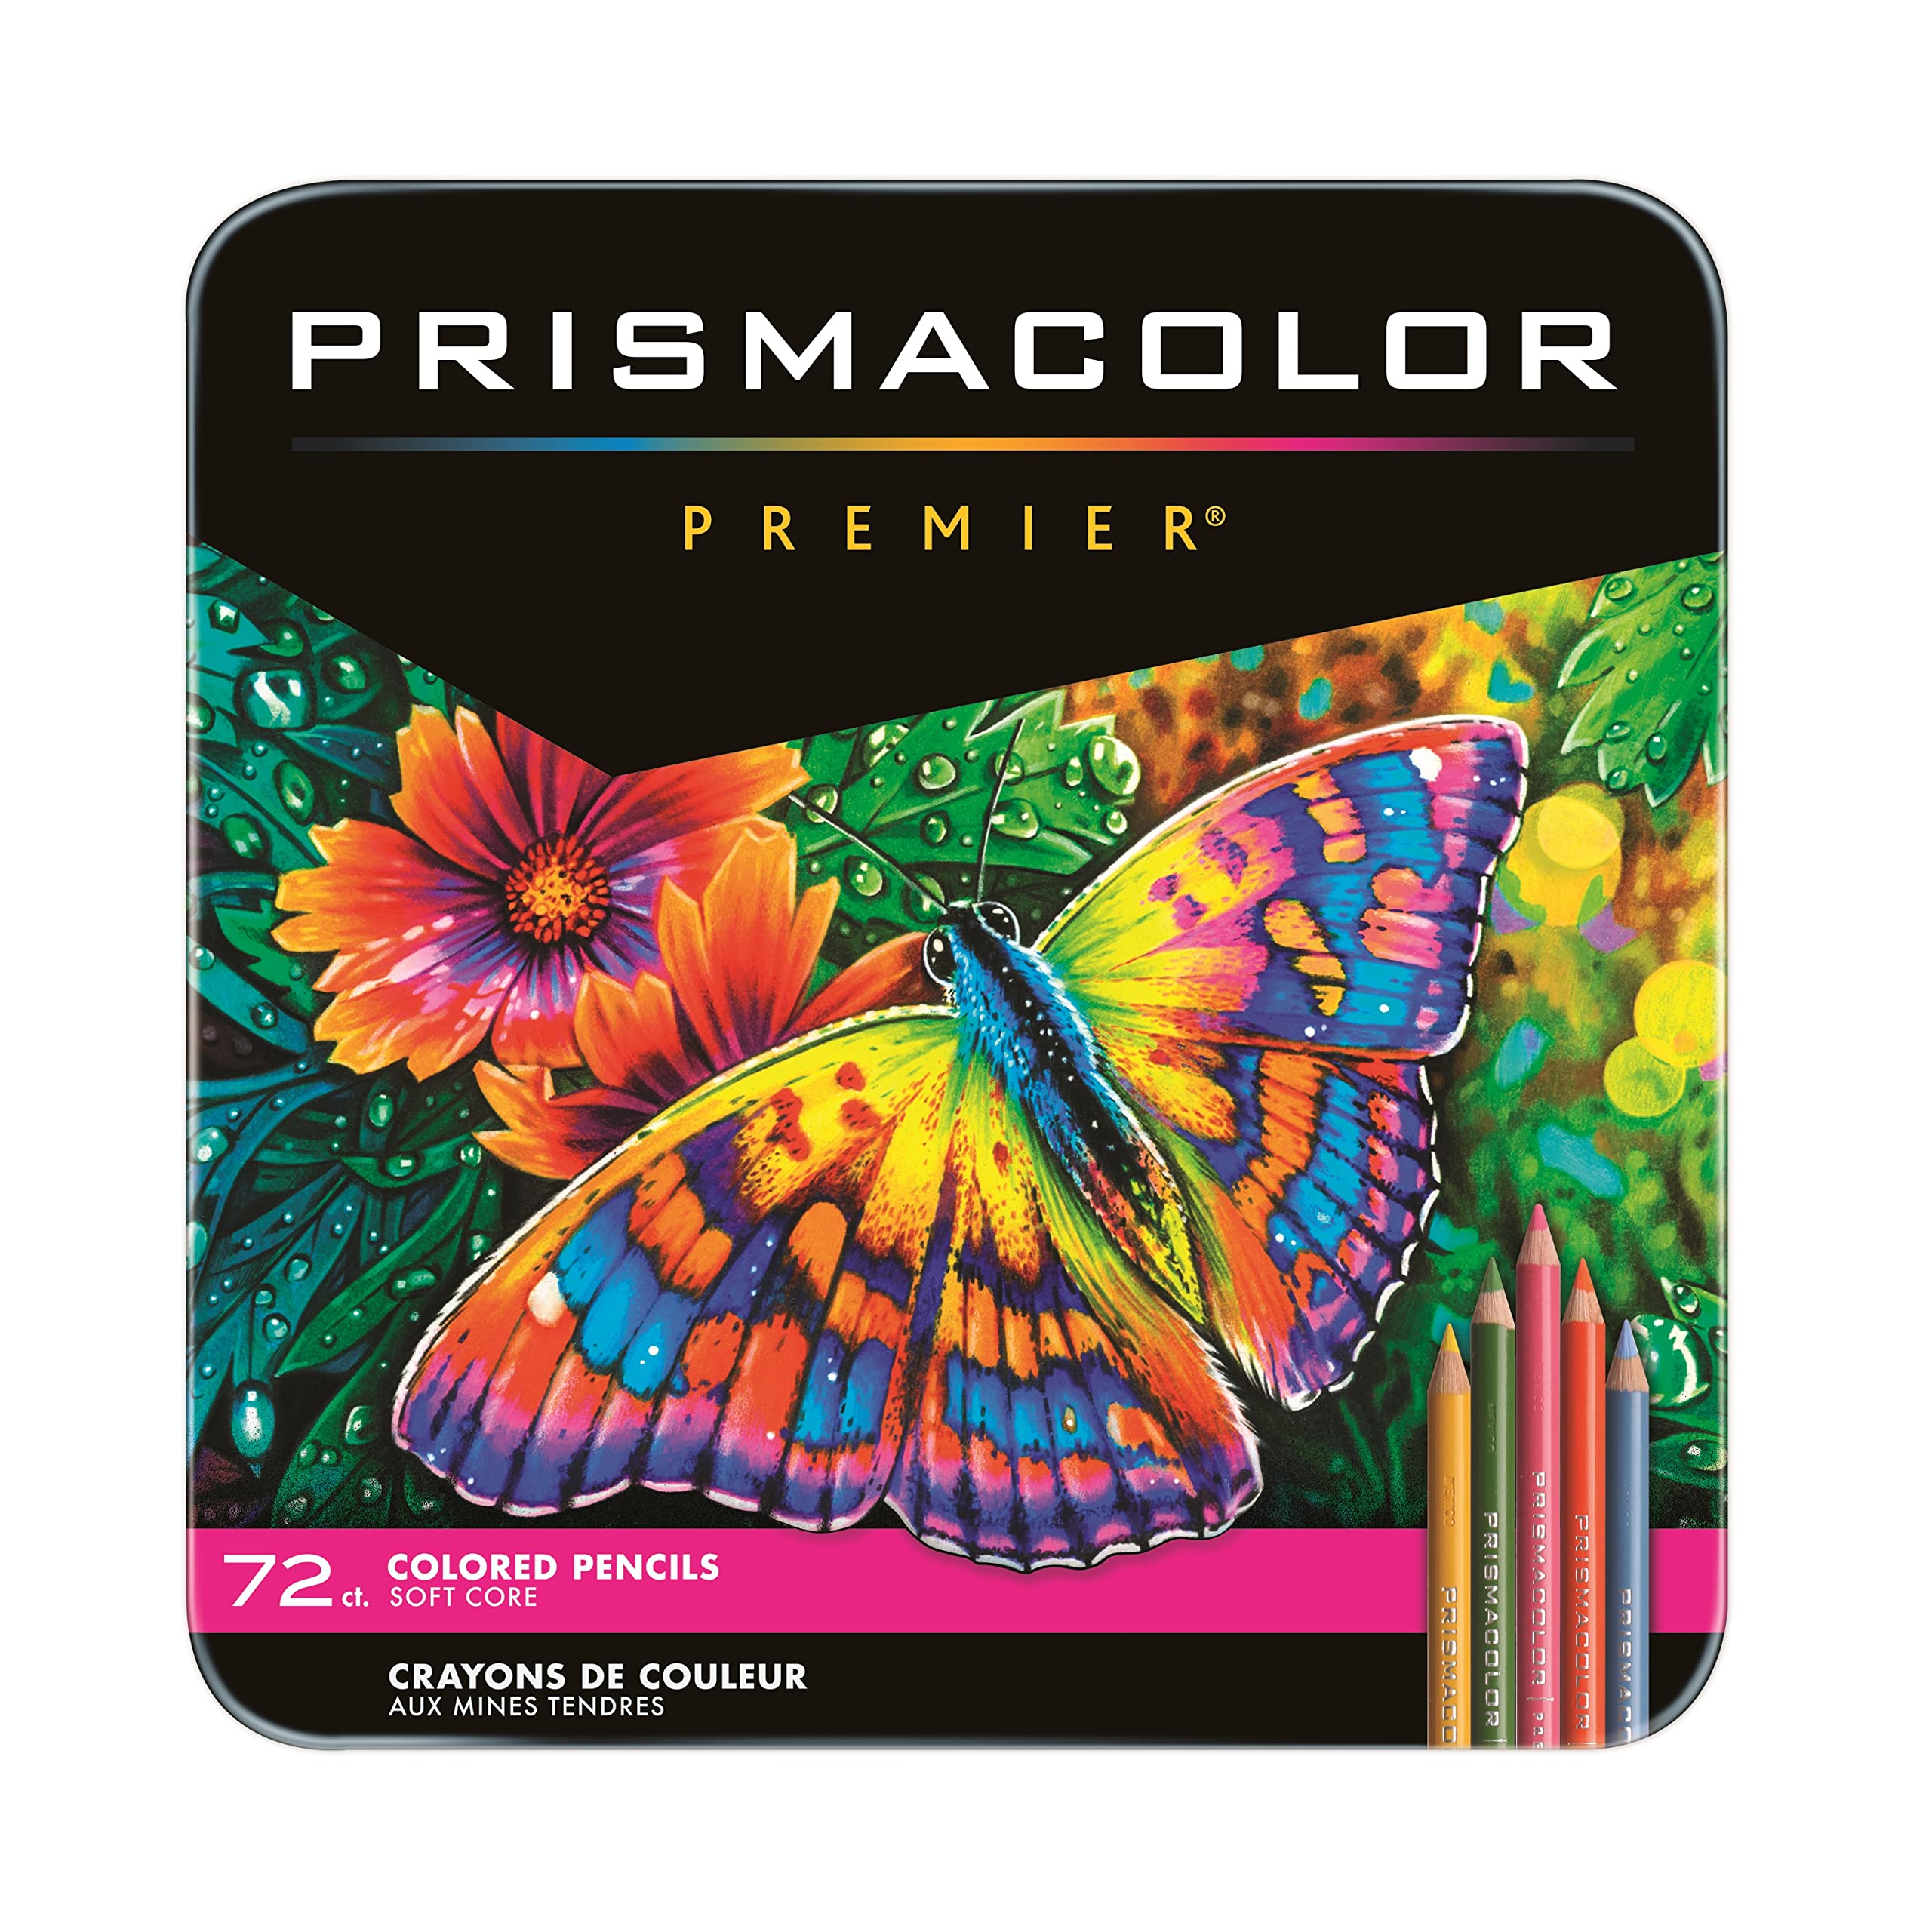 Prismacolor प्रीमियर रंगीन पेंसिलें...